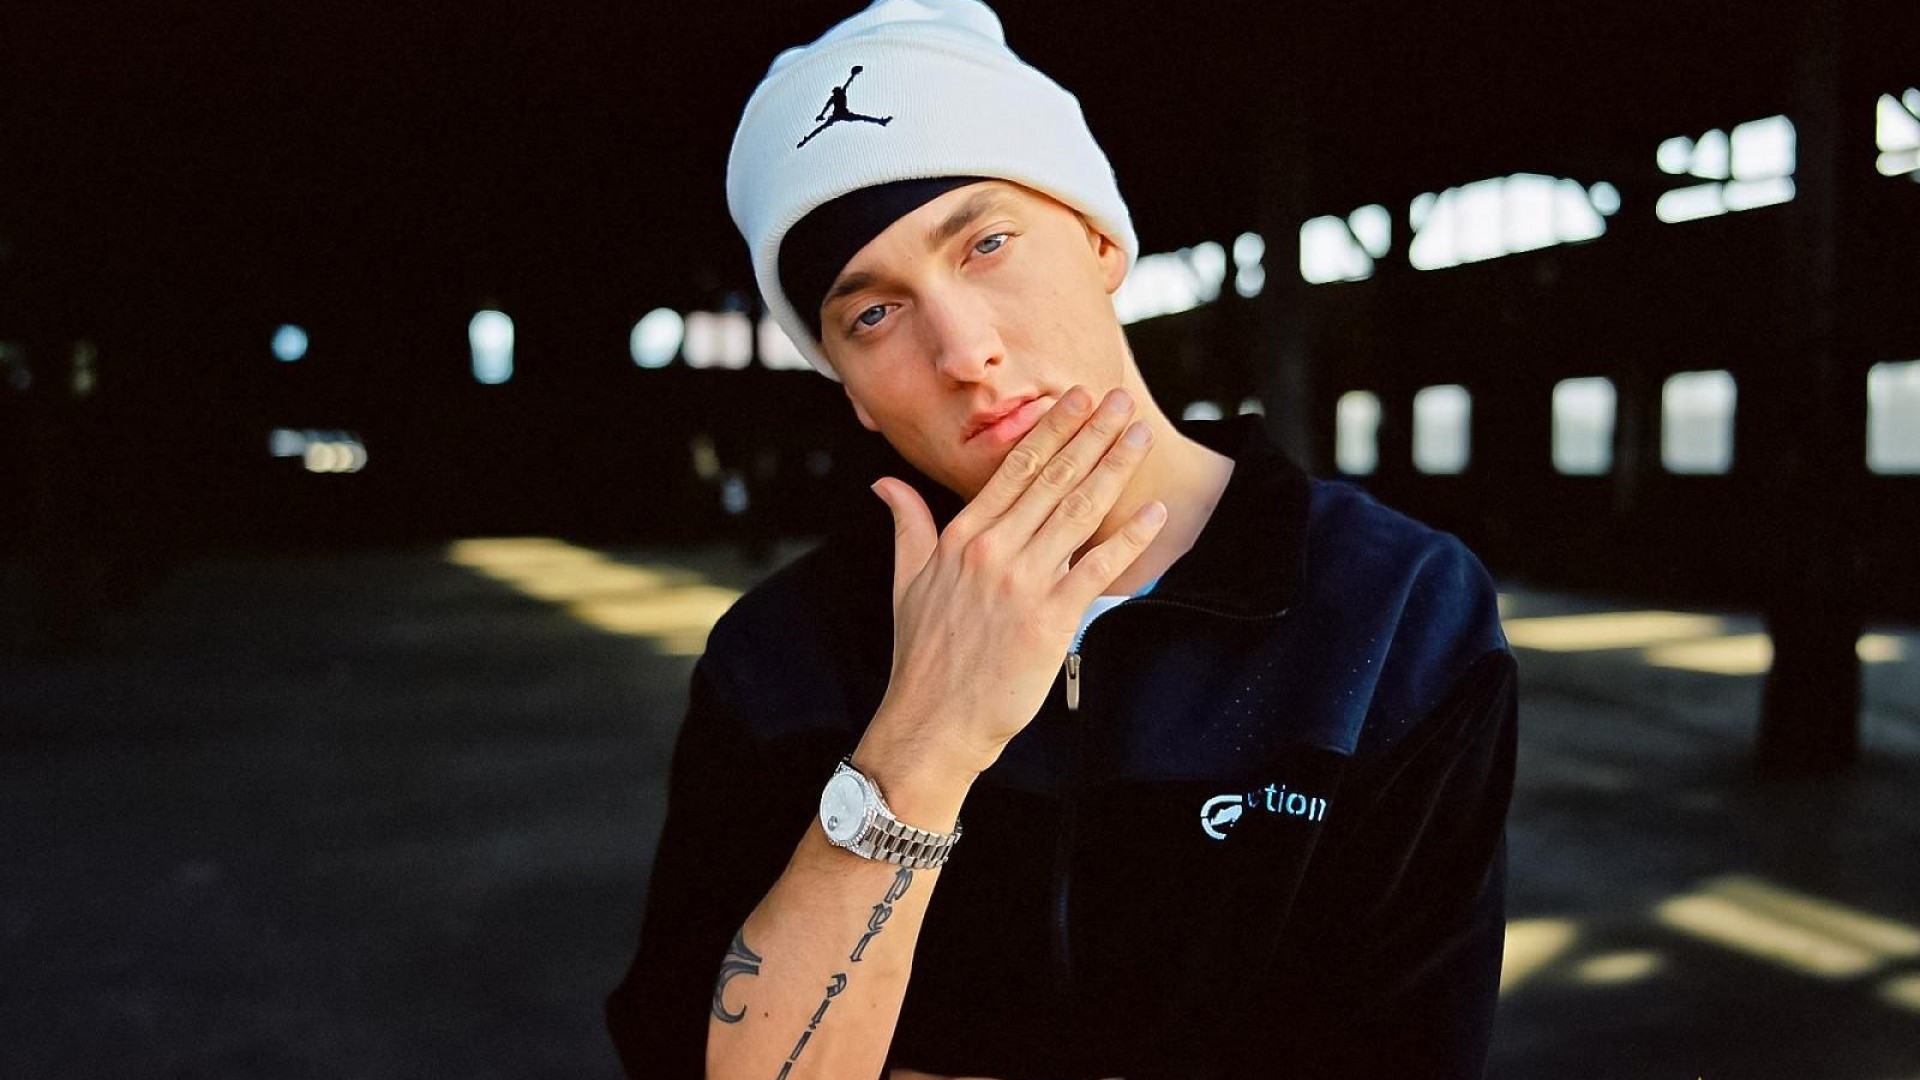 Eminem Wallpapers HD A29